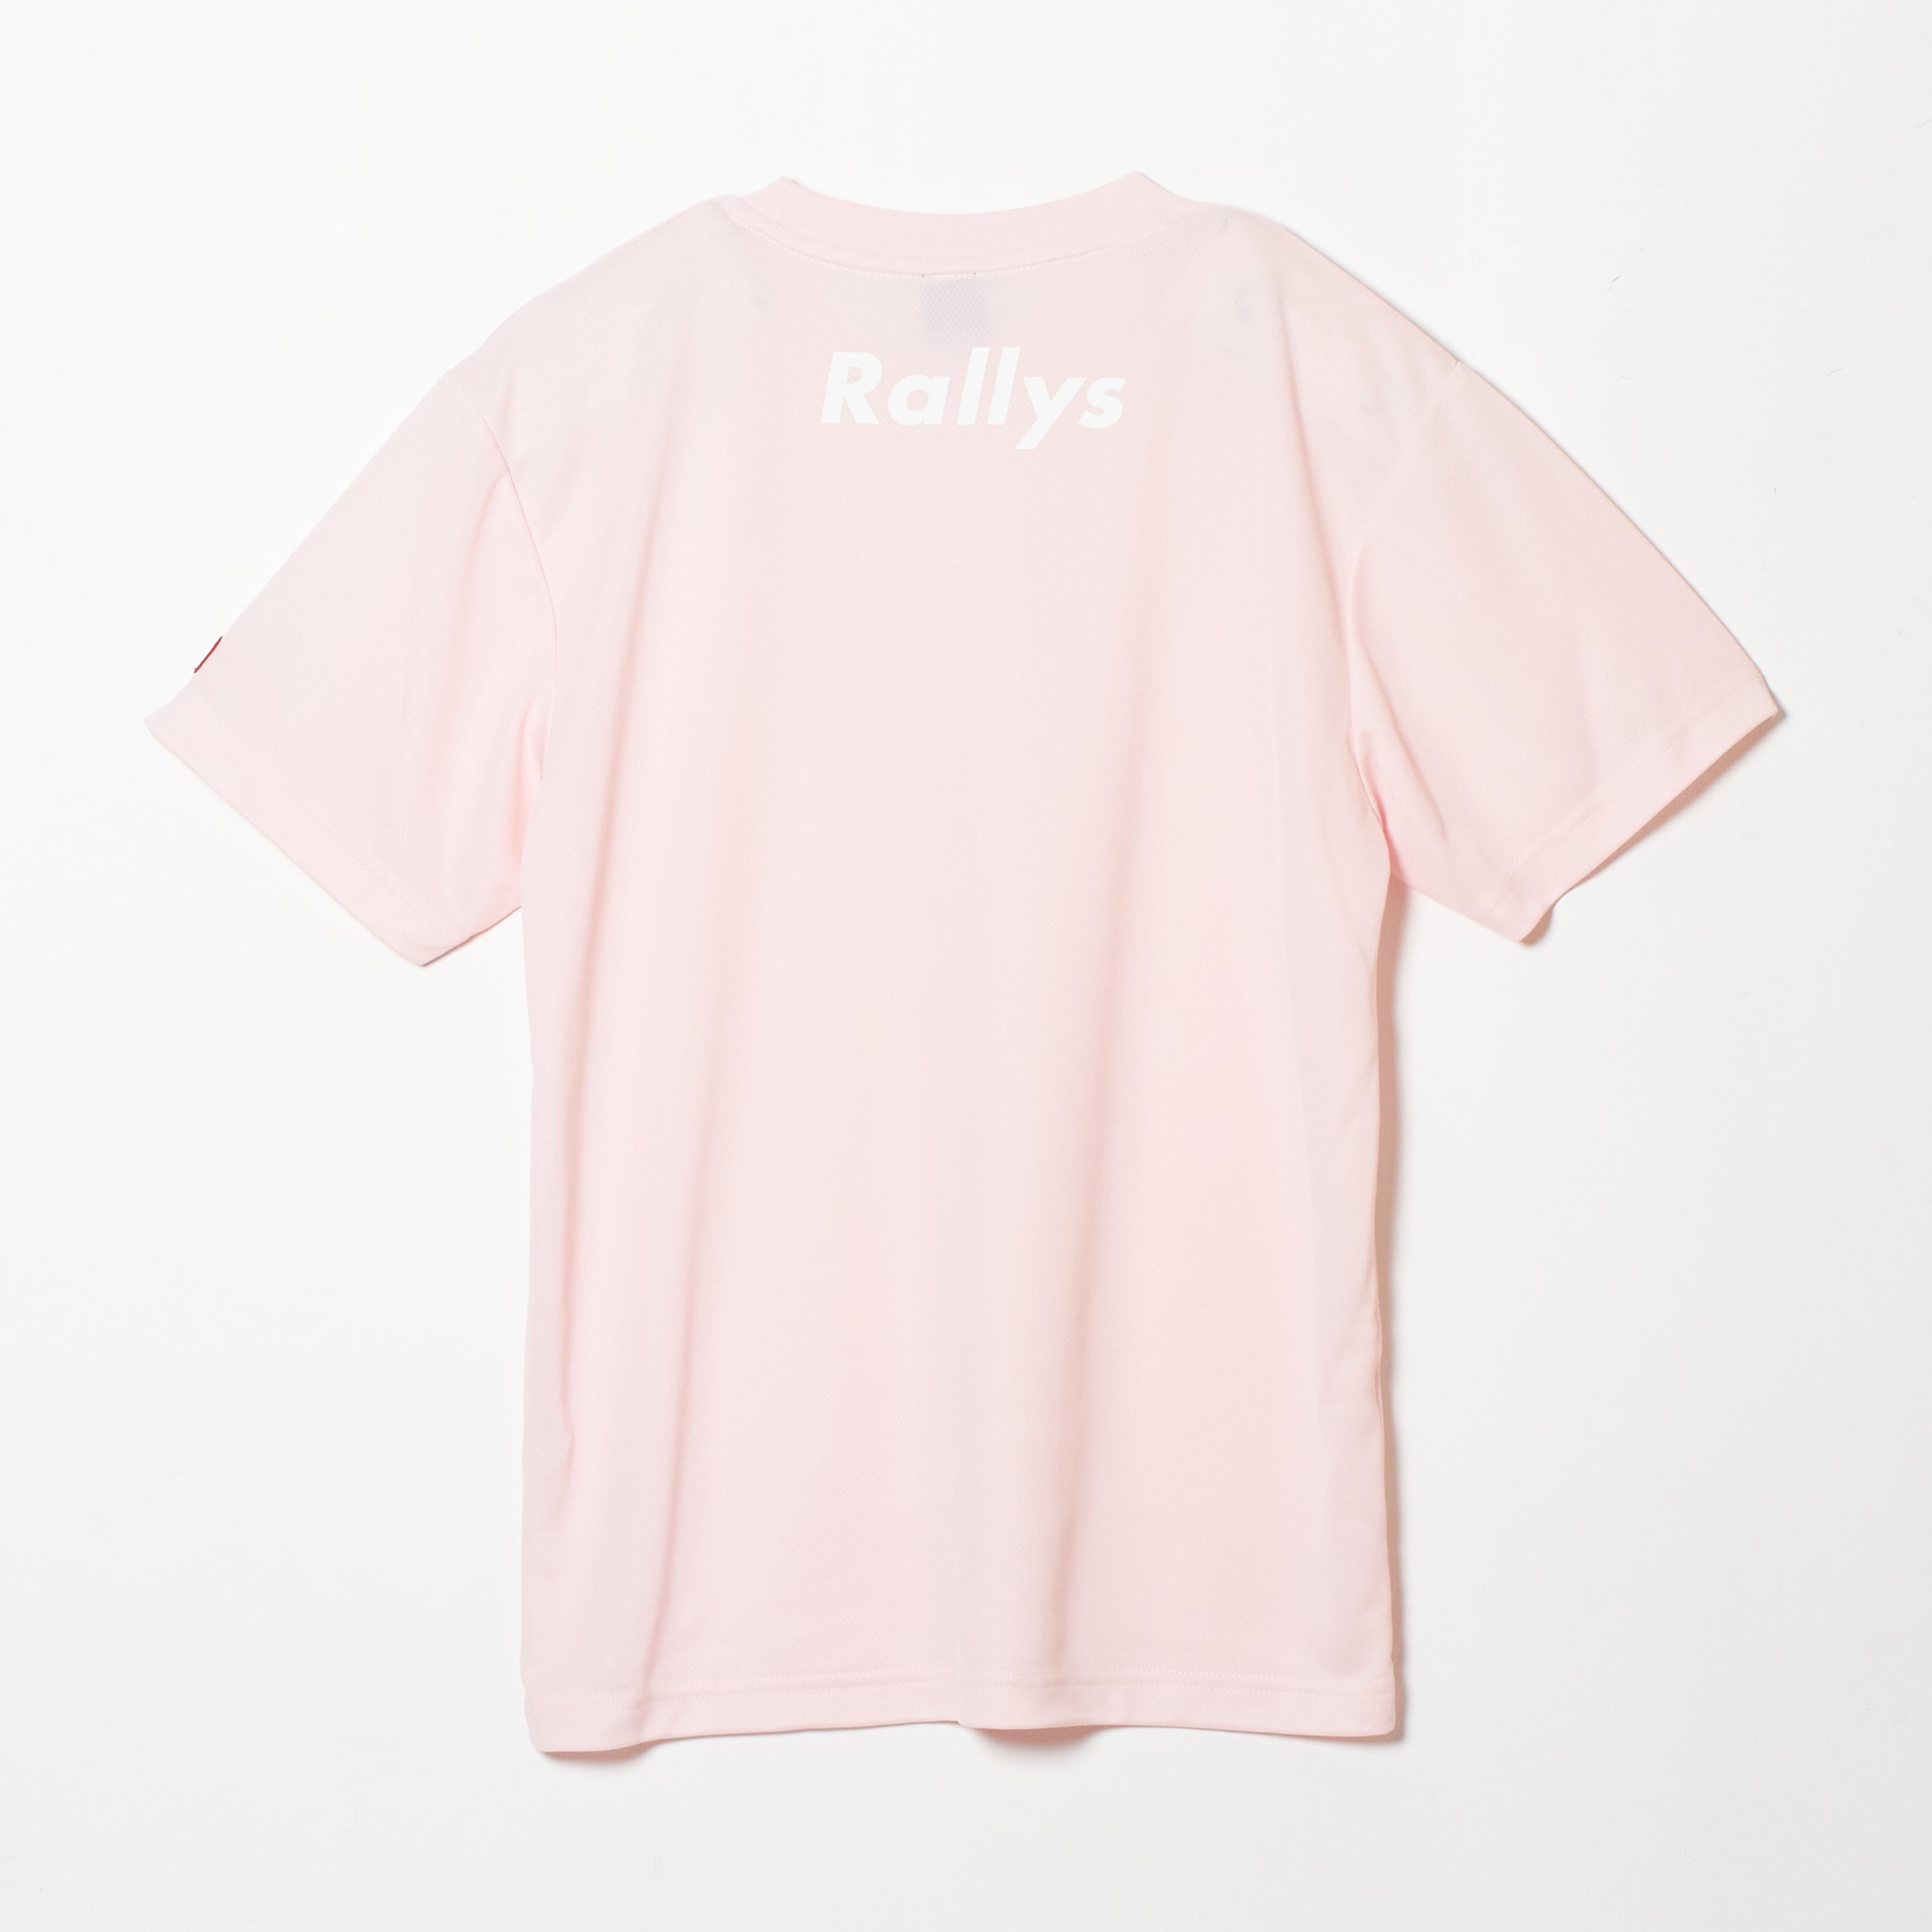 Rallys Tシャツ（ピンク・ロゴ大）｜公式戦でも使える卓球Tシャツ